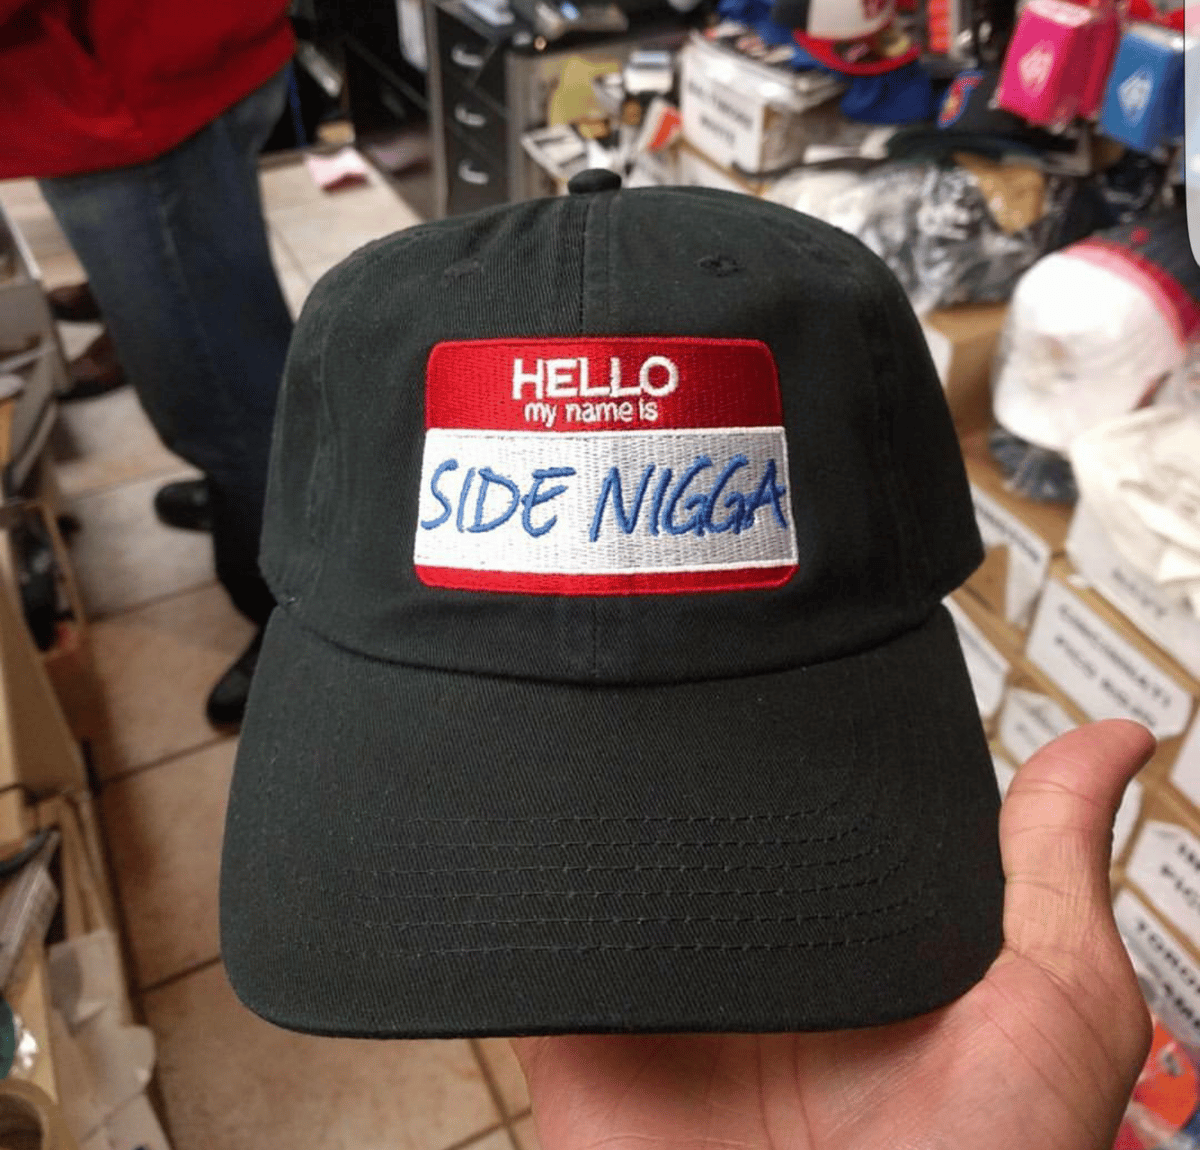 Image of "Side Nigga"